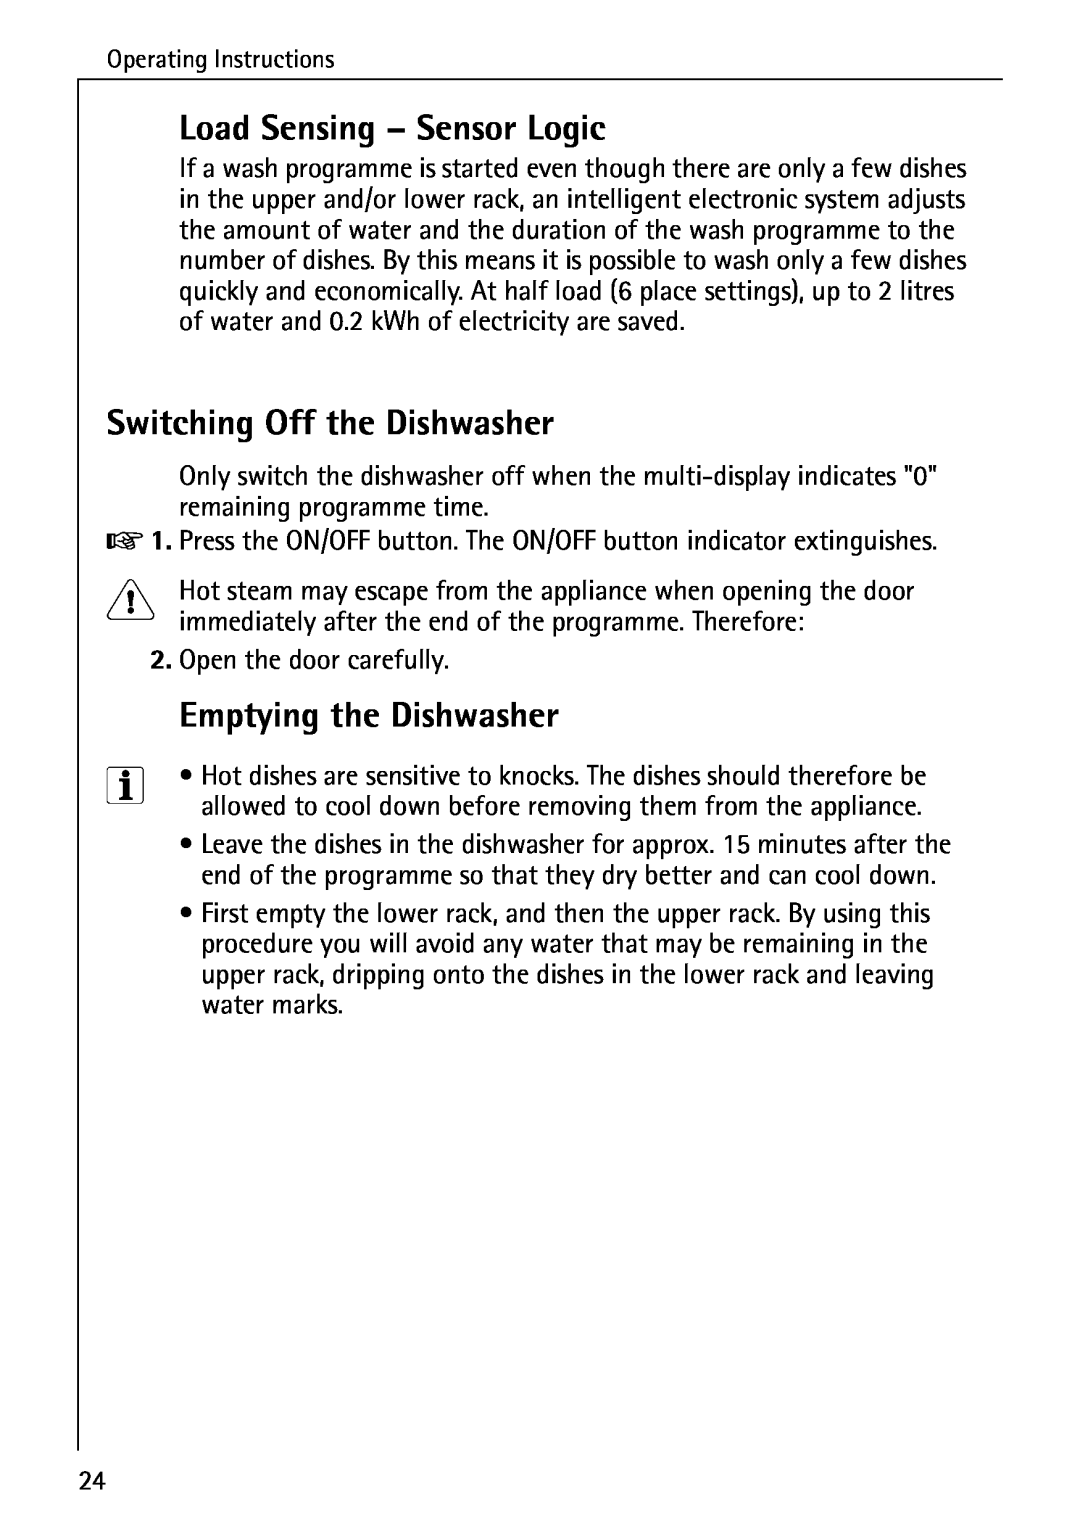 AEG 50800 manual Load Sensing – Sensor Logic, Switching Off the Dishwasher, Emptying the Dishwasher 